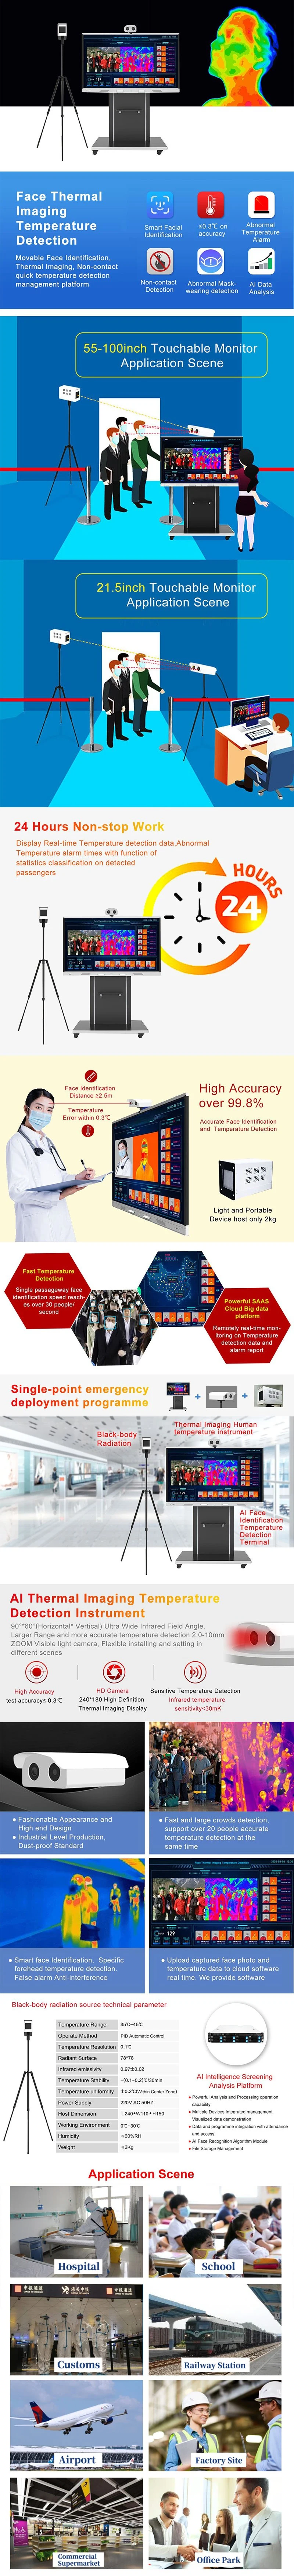 Ai Infrared Emp Screening System for Body Fever Screening Camera